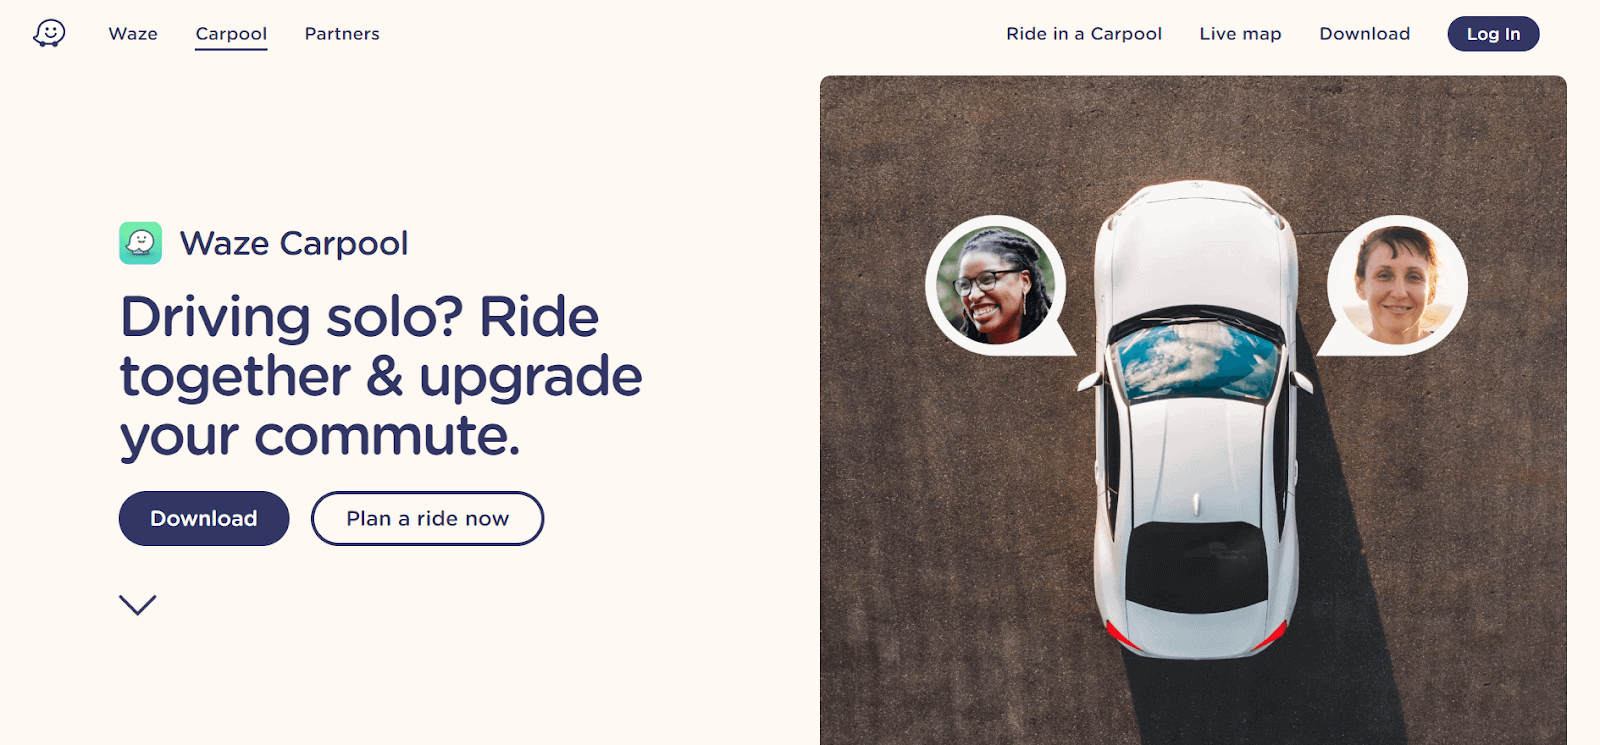 Waze carpool homepage screenshot